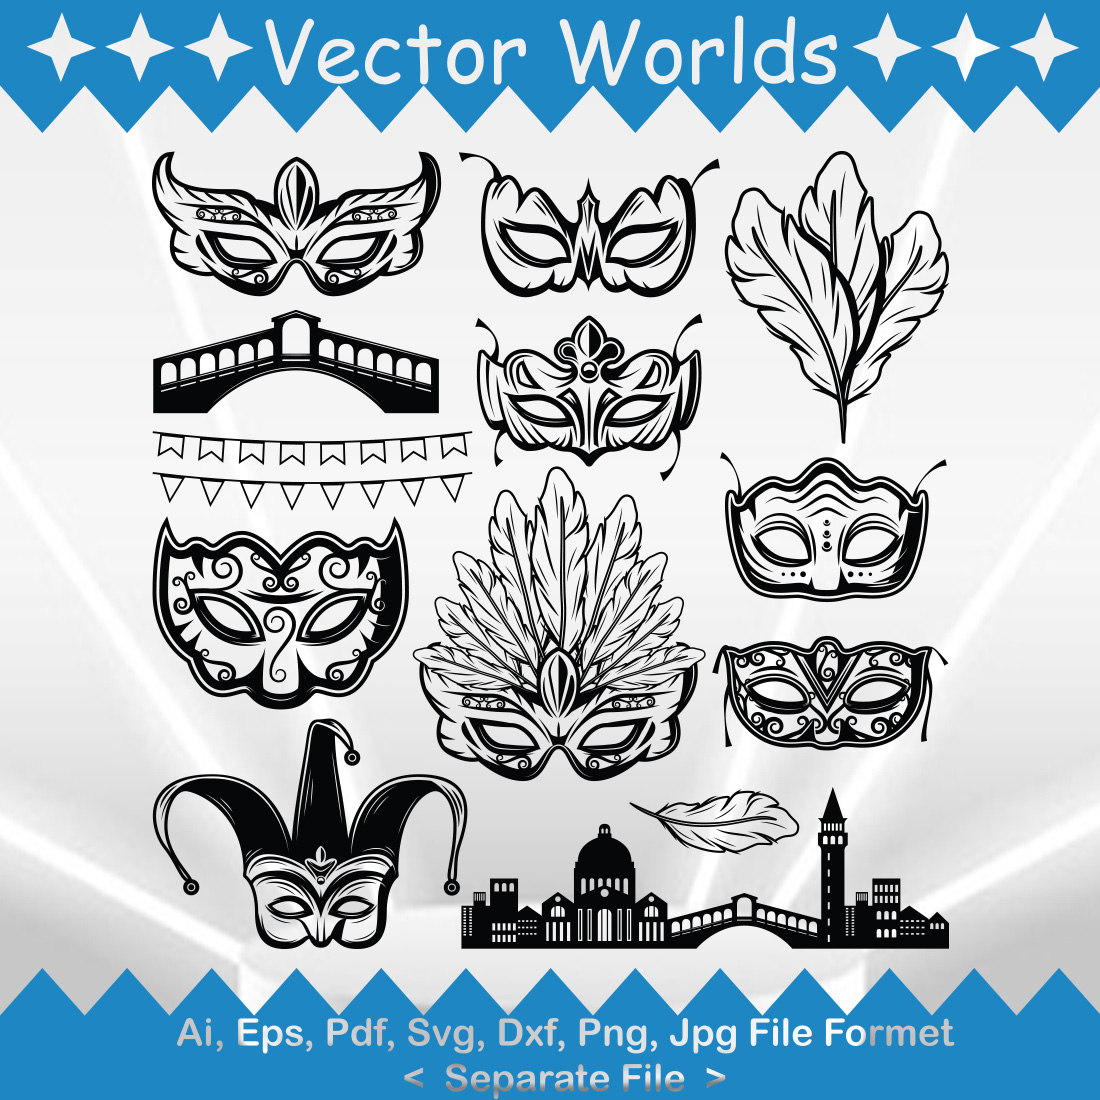 Carnival Of Venice SVG Vector Design cover image.